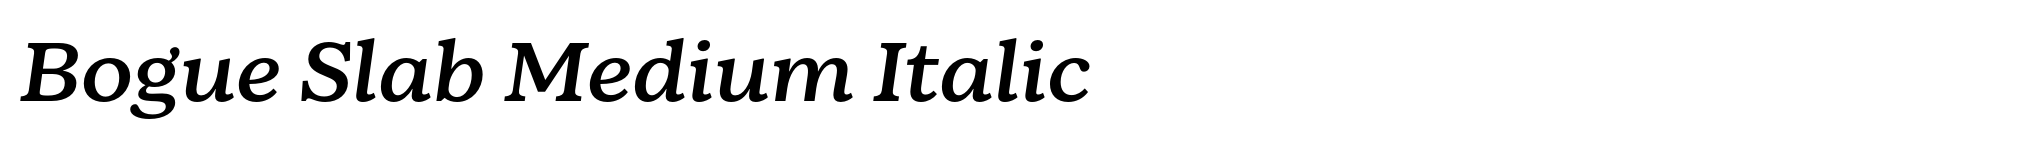 Bogue Slab Medium Italic image